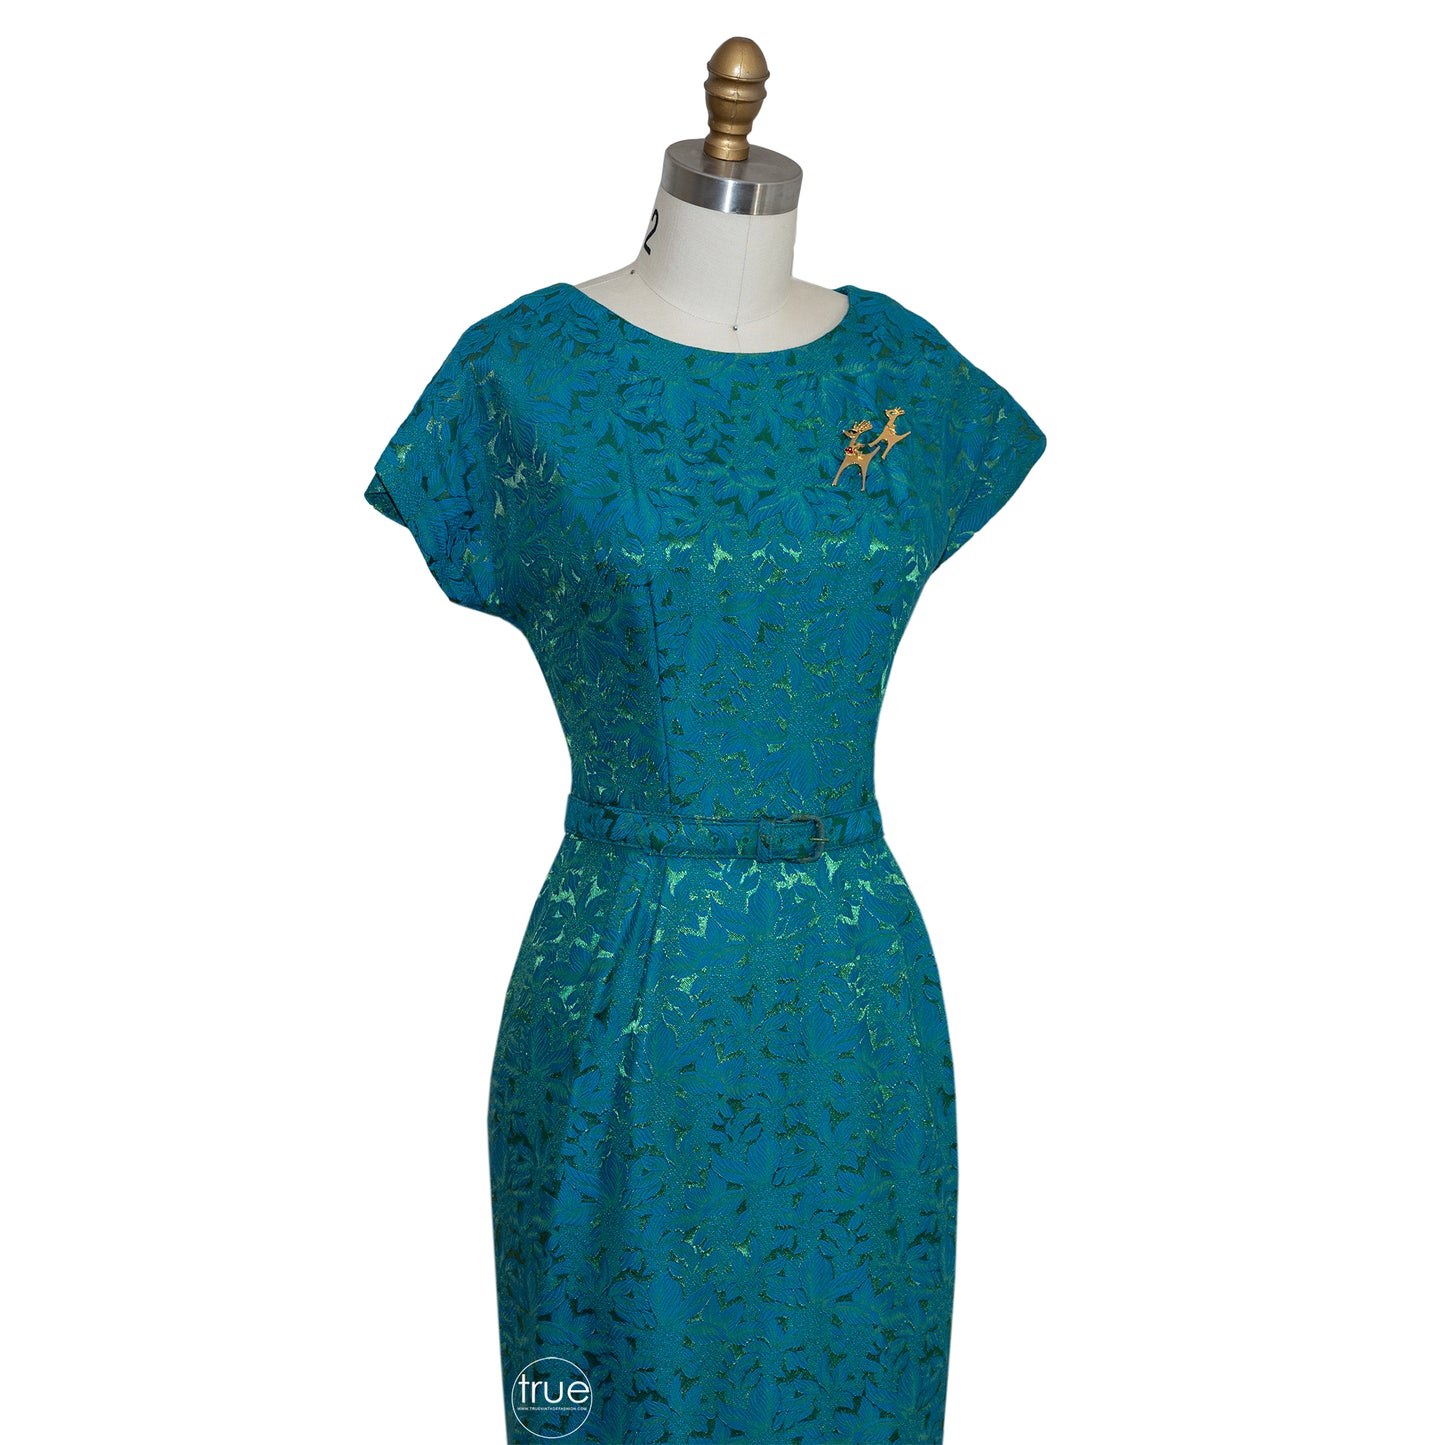 vintage 1950's dress ...lovely sapphire blue & emerald green brocade dress and jacket